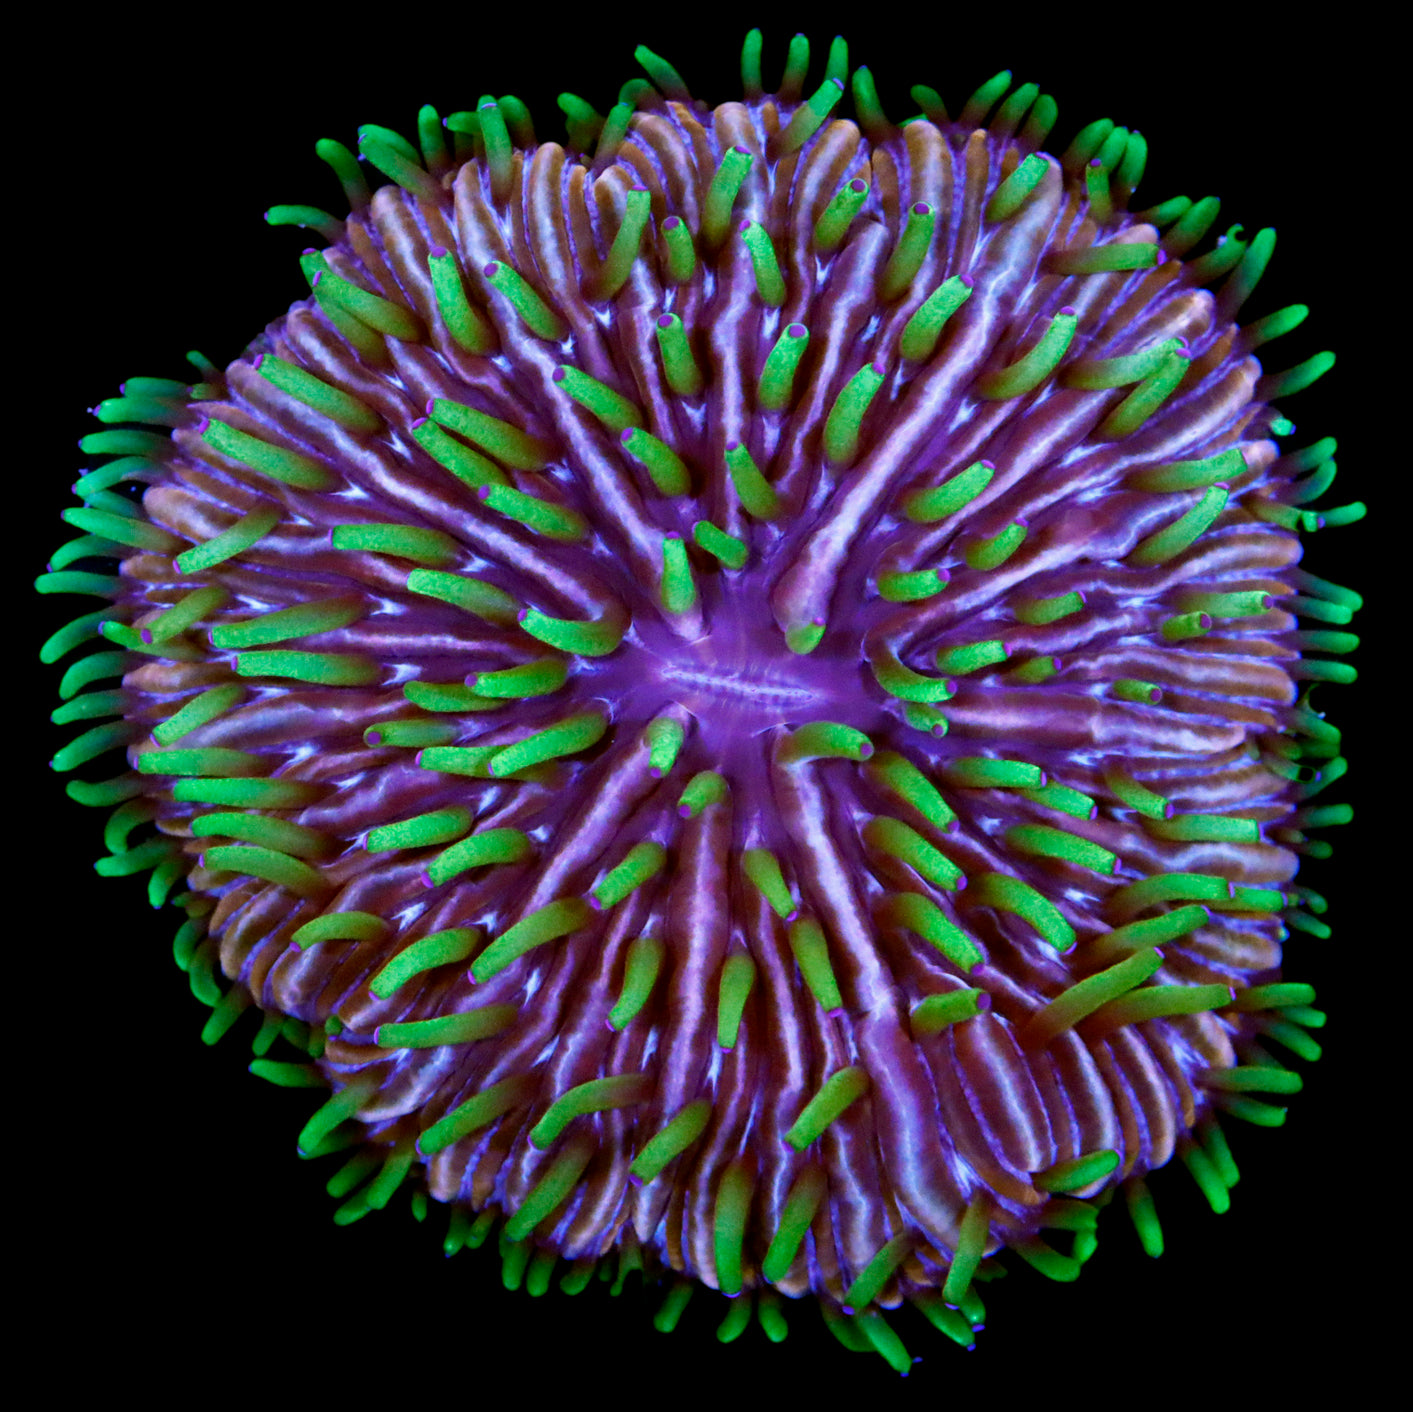 Ultra Green Bubble Coral